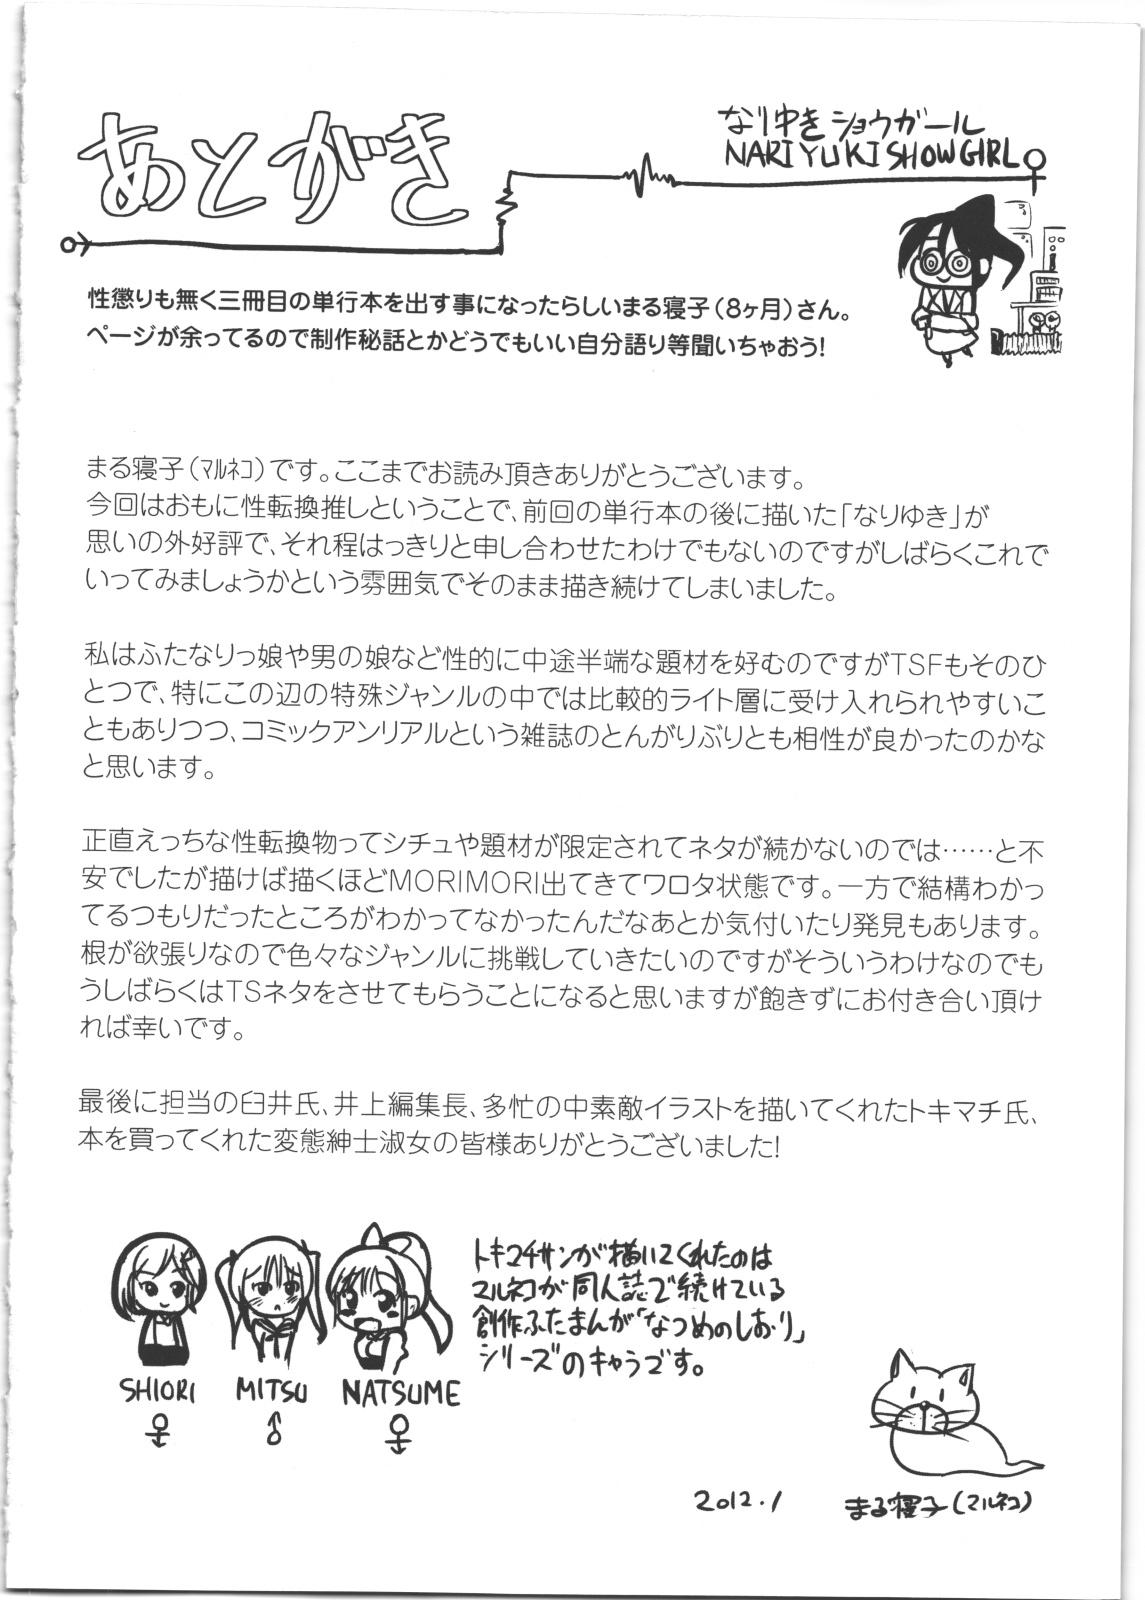 Girls Nariyuki Show Girl Collar - Page 177